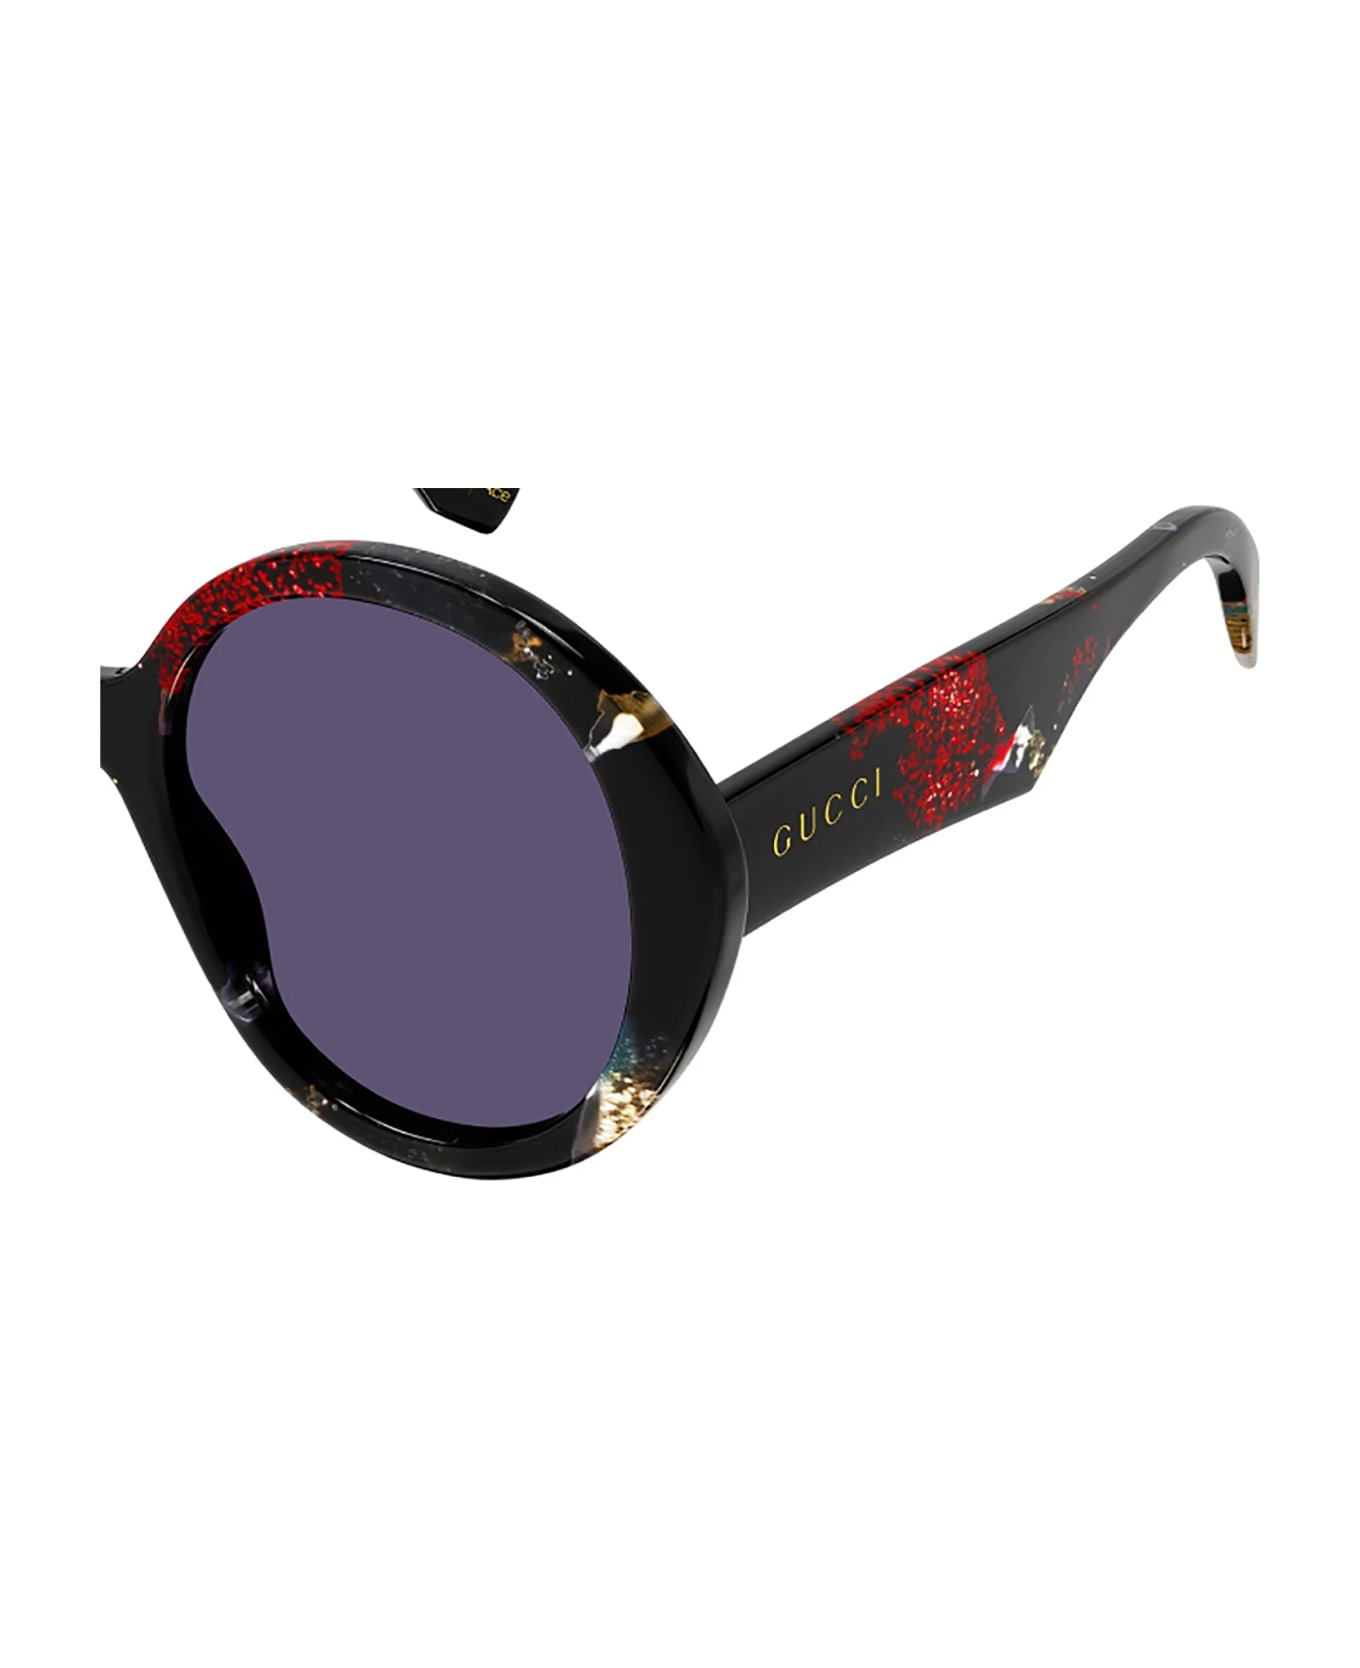 Gucci Eyewear GG1628S Sunglasses - Black Black Violet